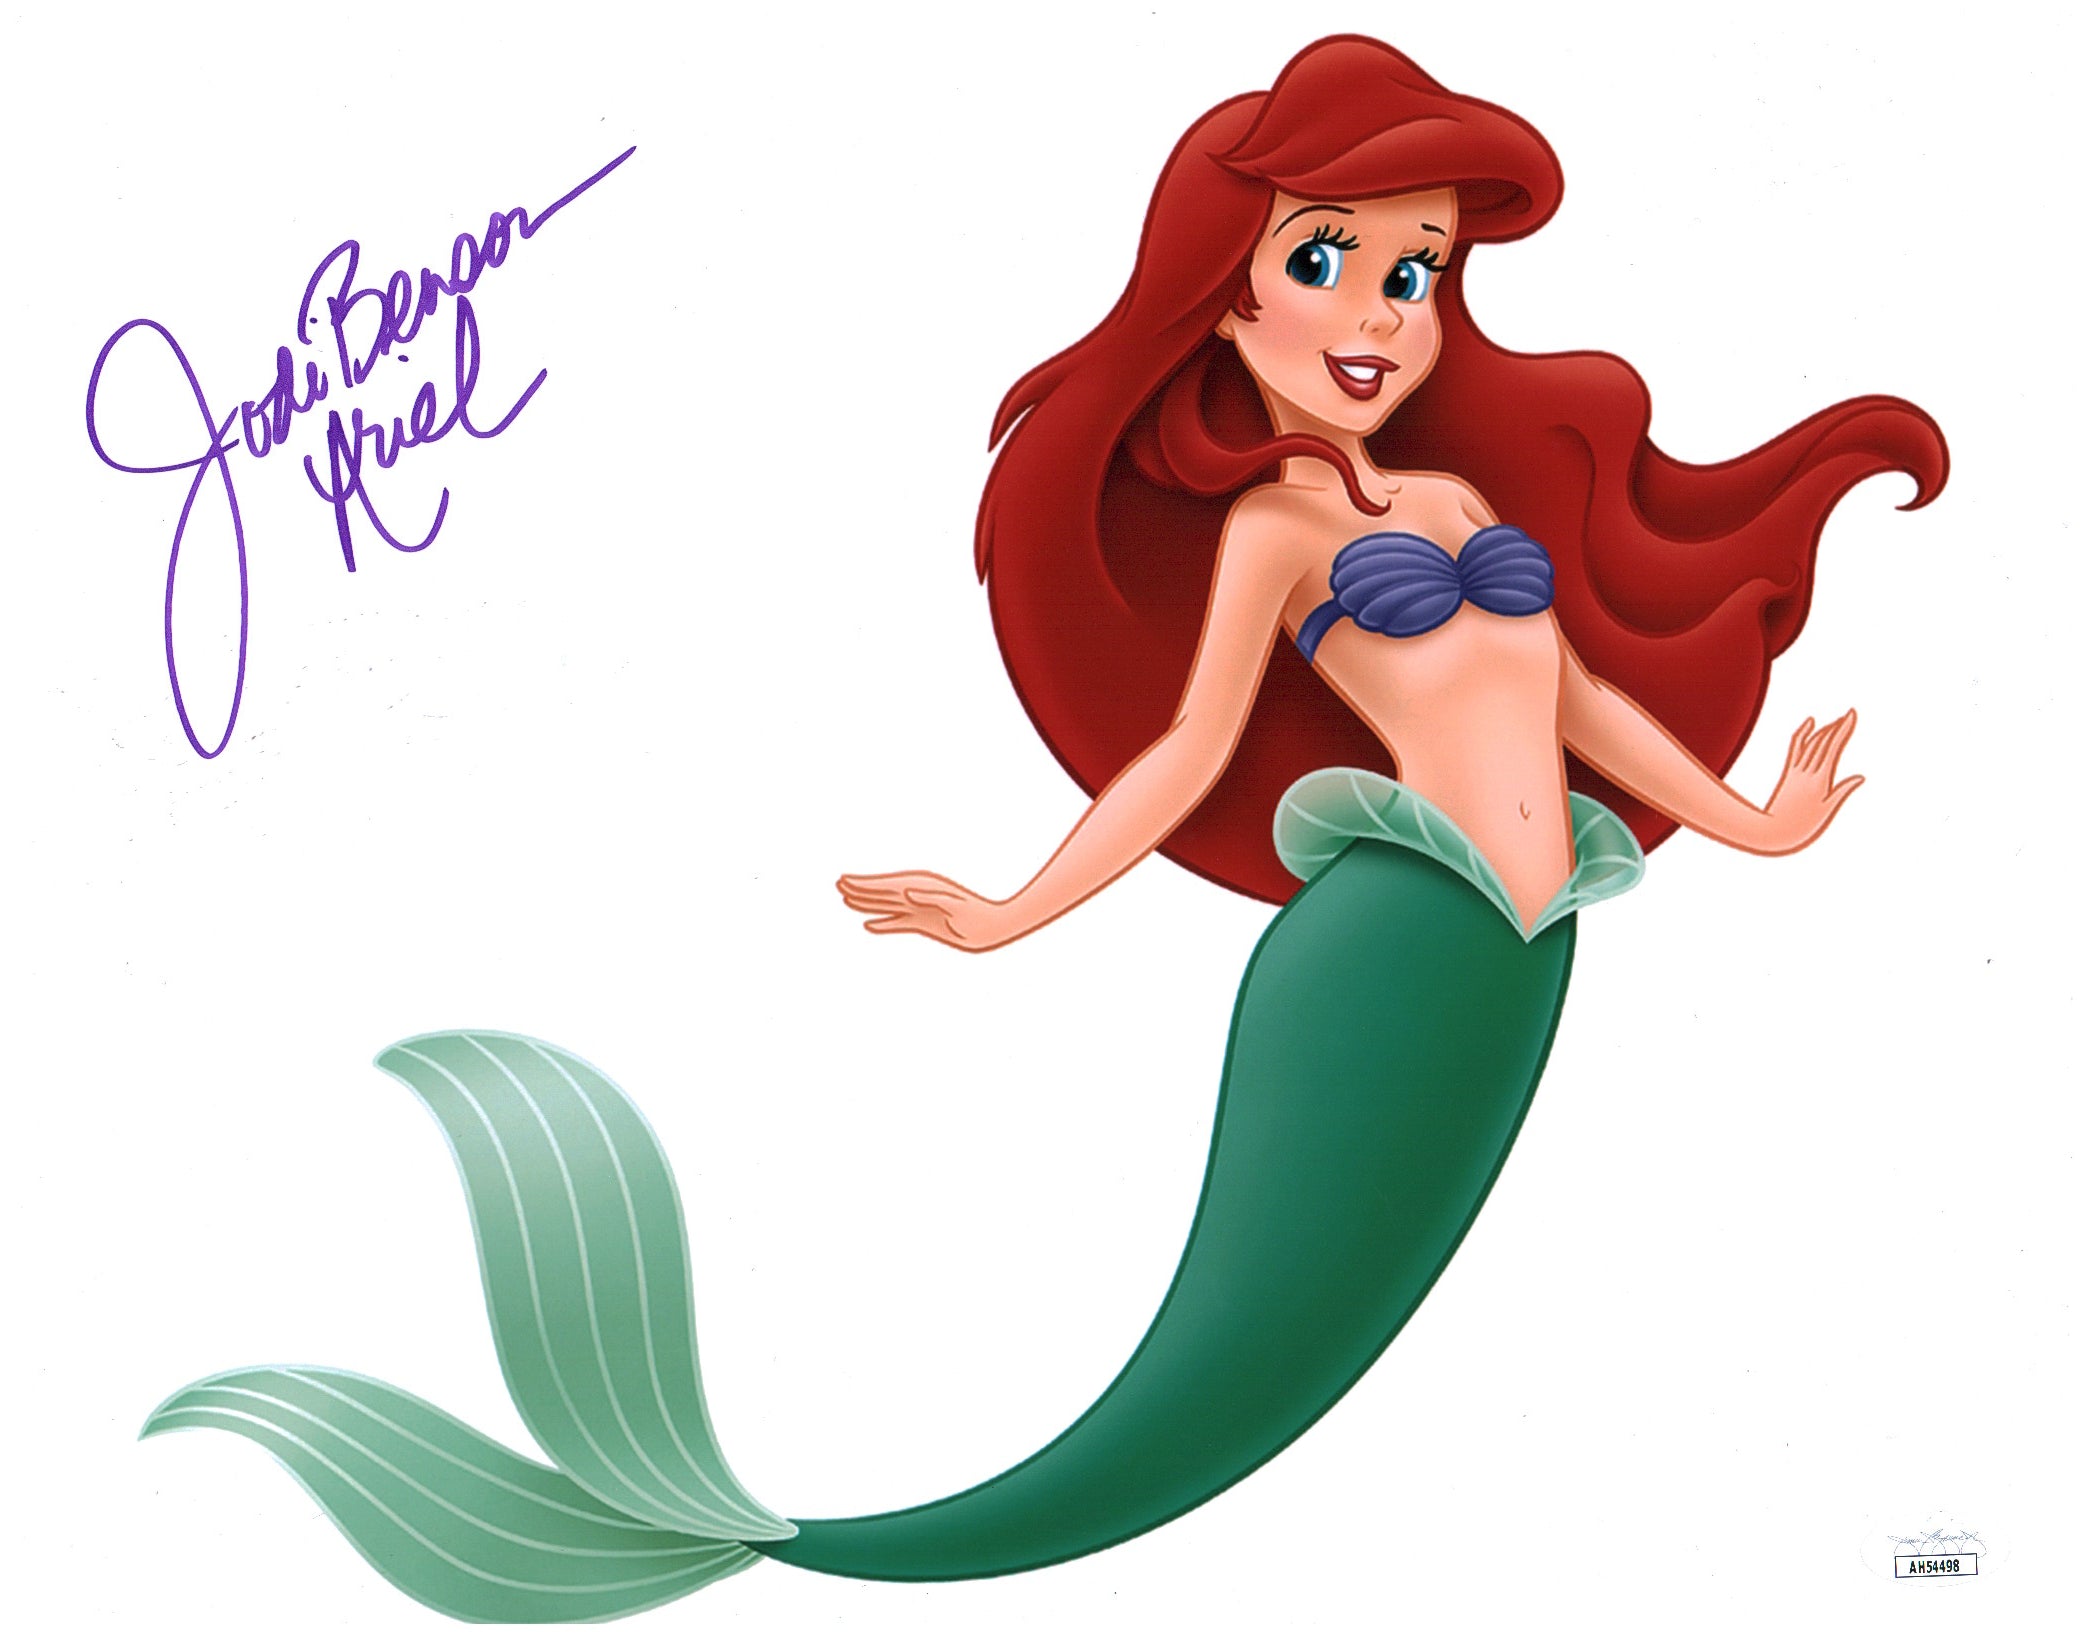 Jodi Benson Disney The Little Mermaid 11x14 Signed Photo Poster JSA COA Certified Autograph